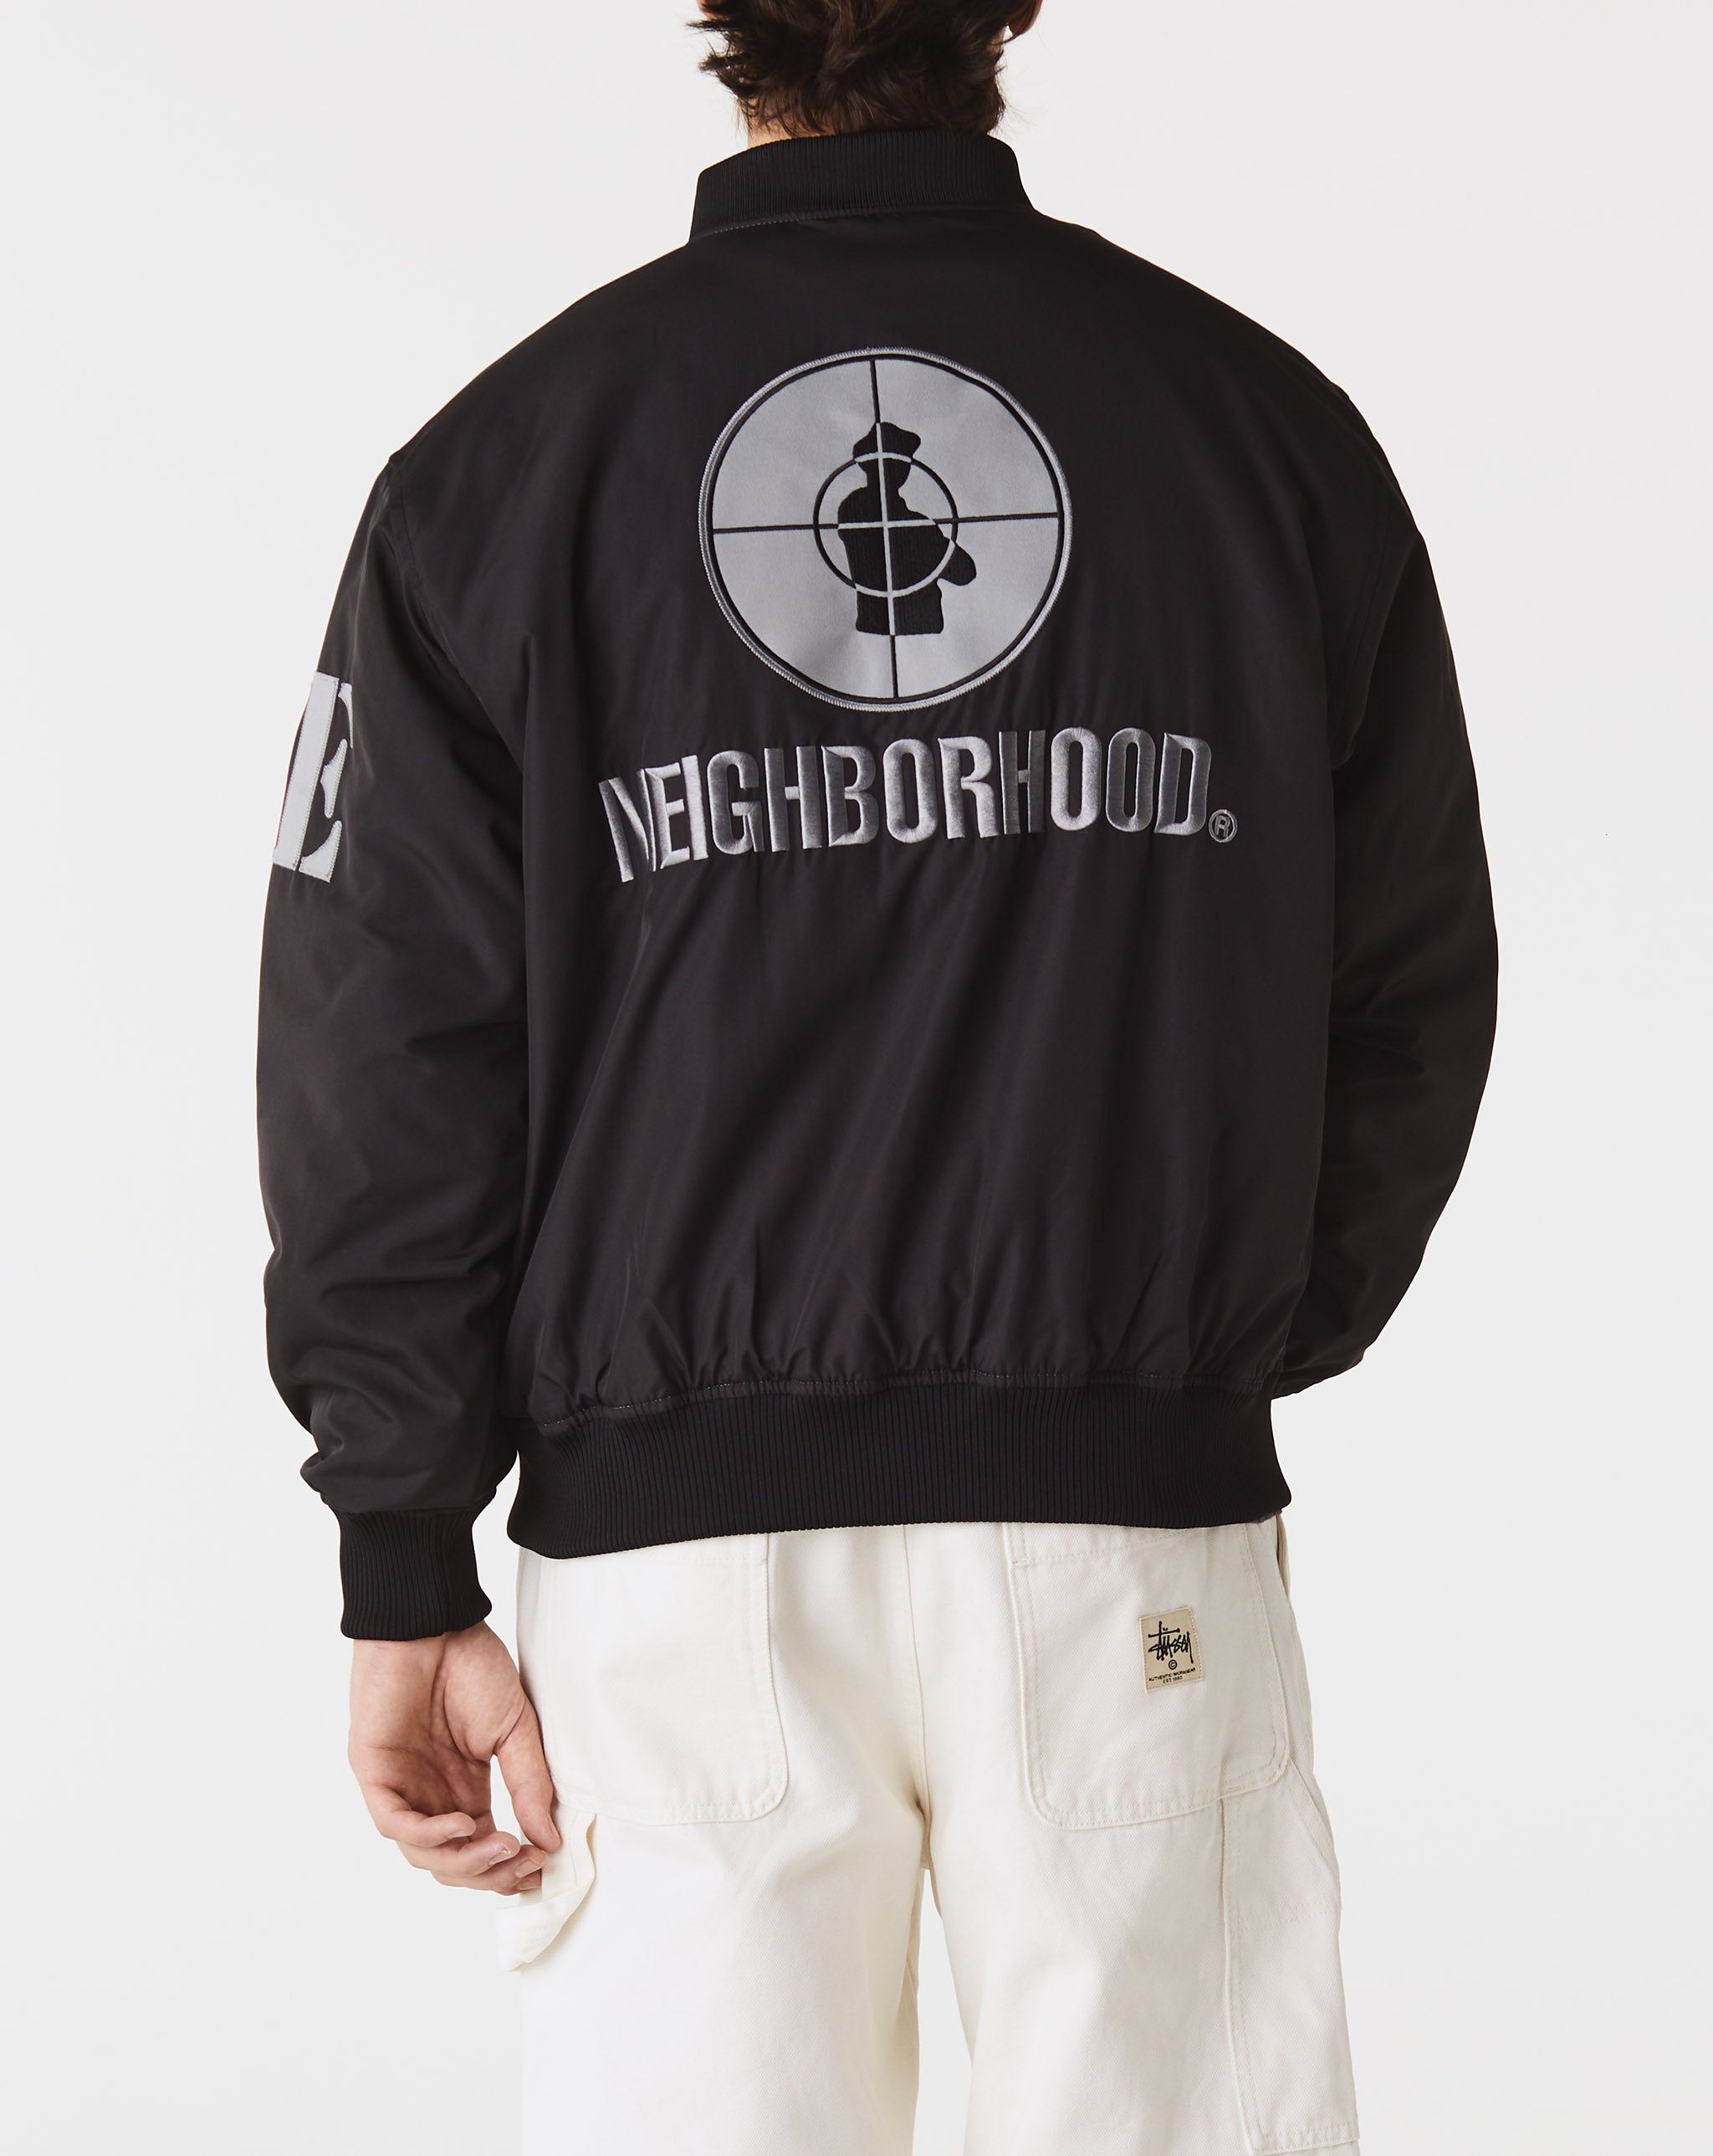 Neighborhood Public Enemy x Majestic Baseball Jacket  - XHIBITION